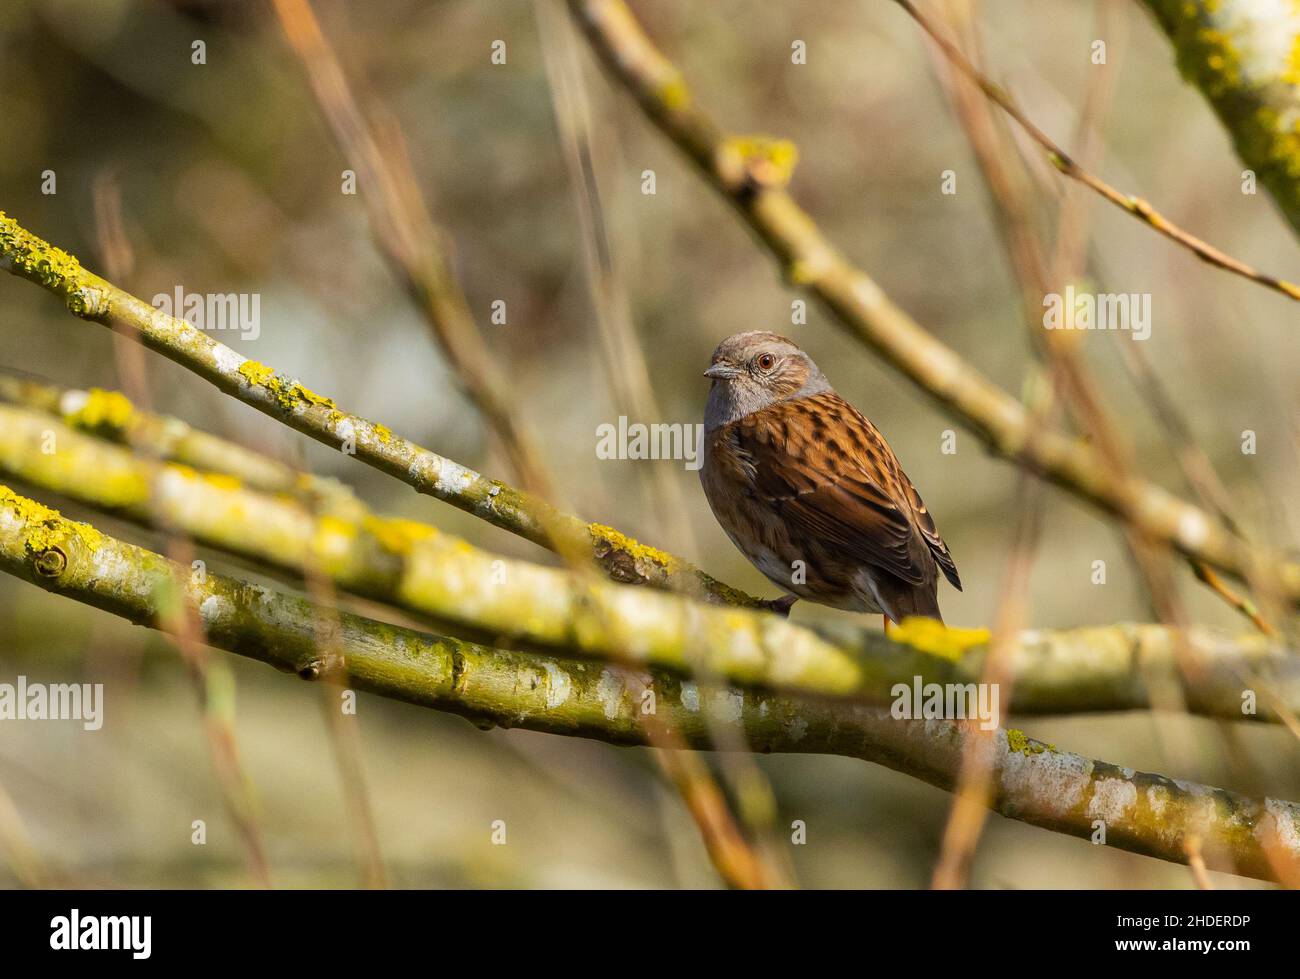 Dunnock bird sitting on tree branch Stock Photo